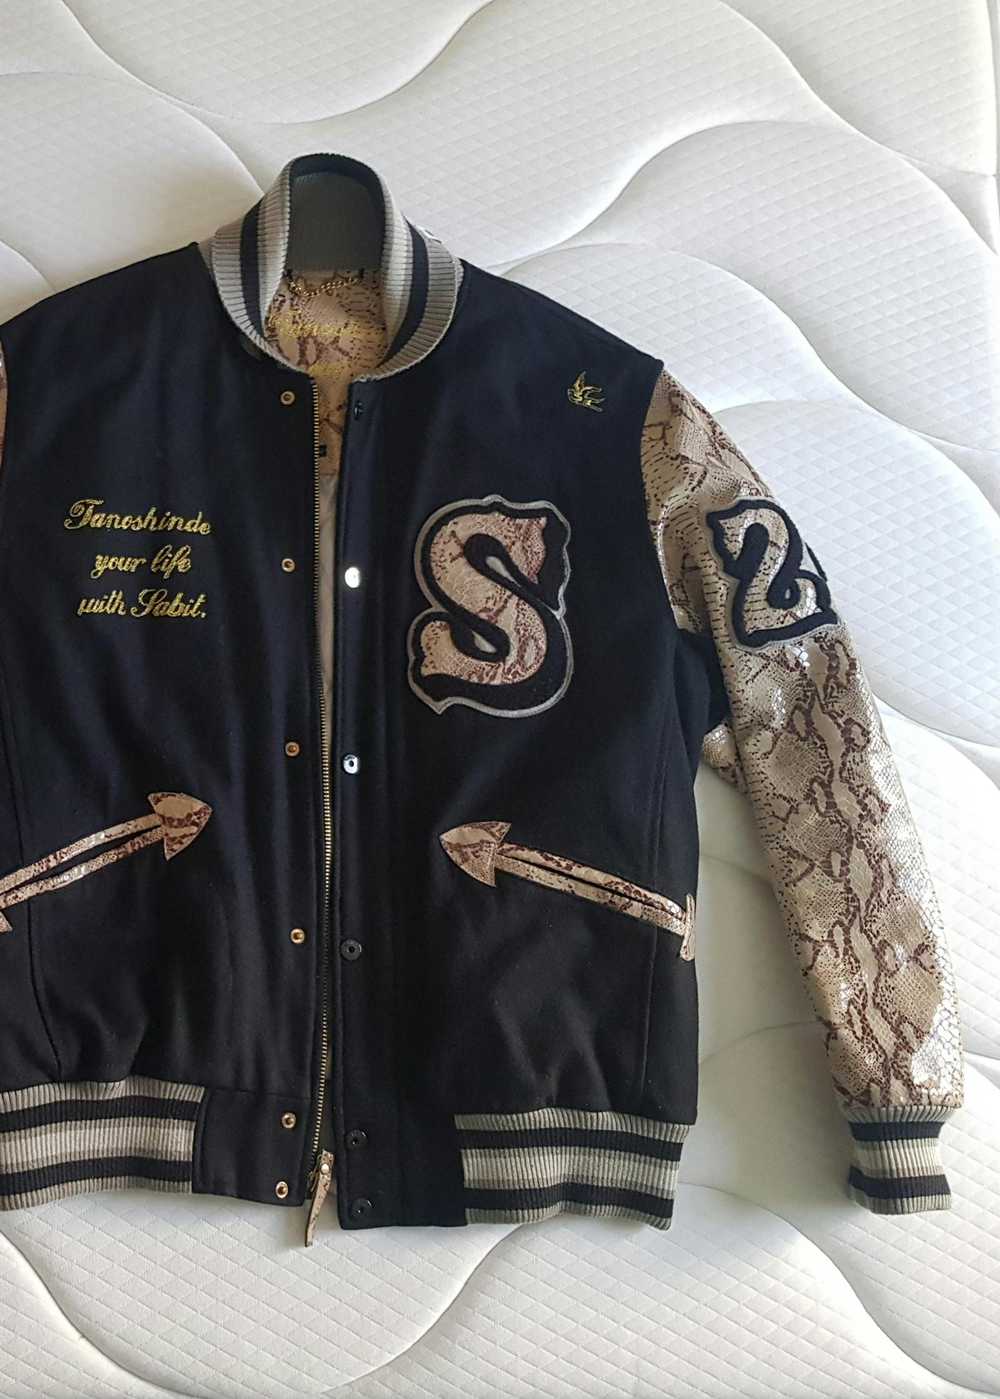 Sabit Nyc Sabit NYC - Rare Varsity Jacket - image 5